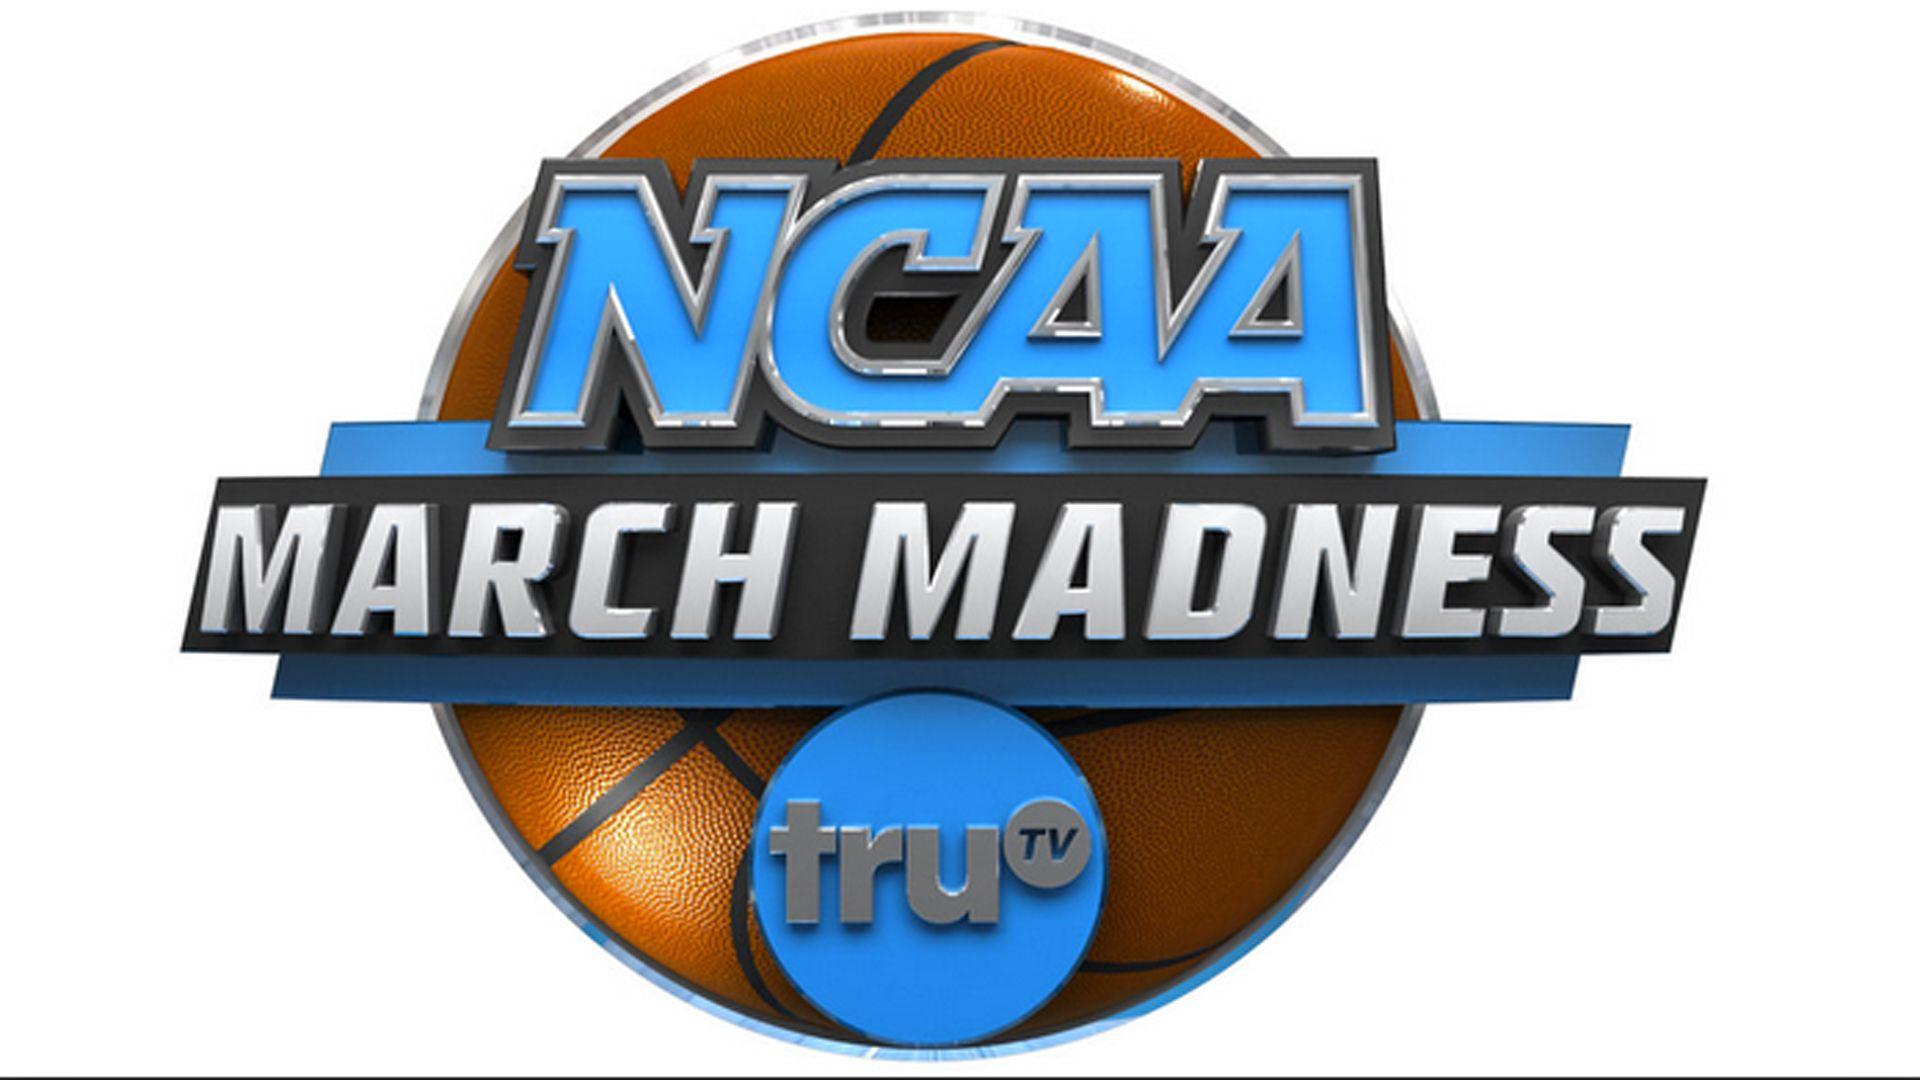 truTV Logo - NCAA Tournament 2017: What channel is truTV? | NCAA Basketball ...